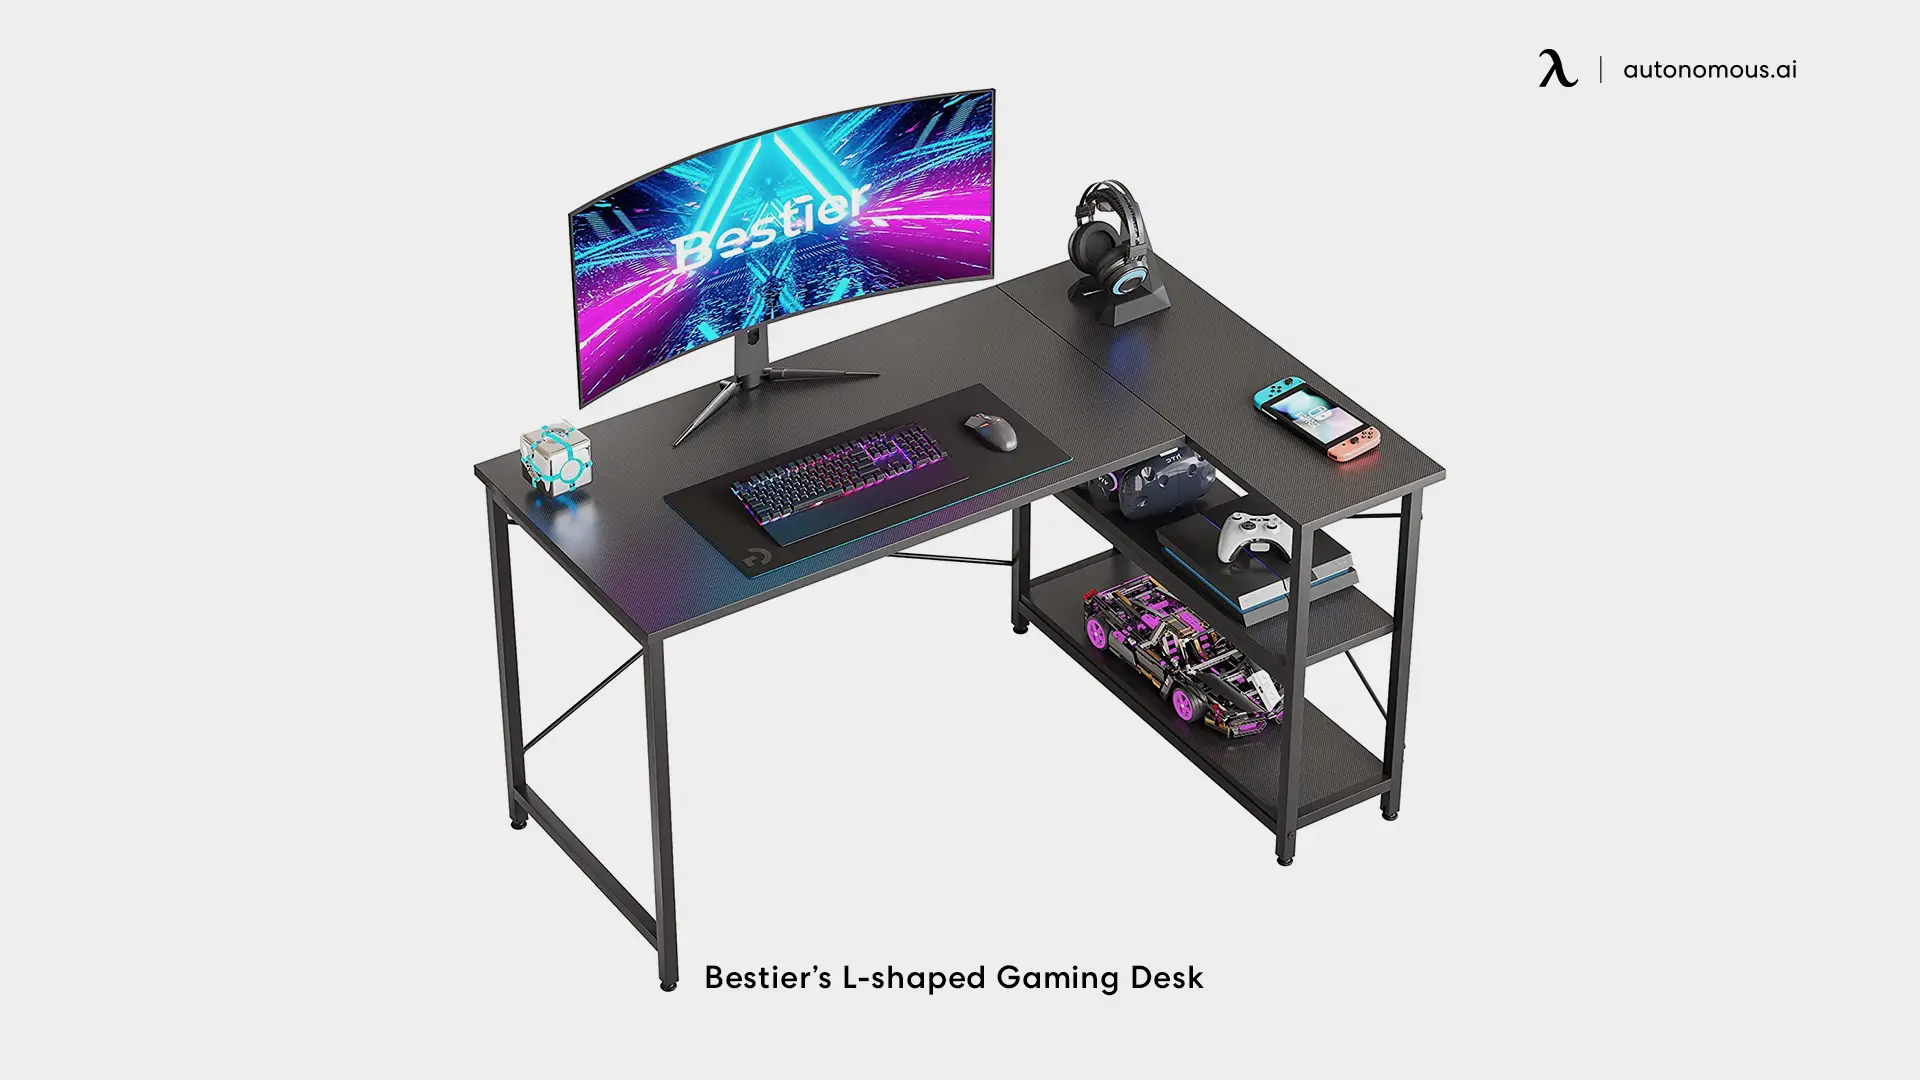 Bestier’s L-shaped Gaming Desk - Black Friday L-shaped desk